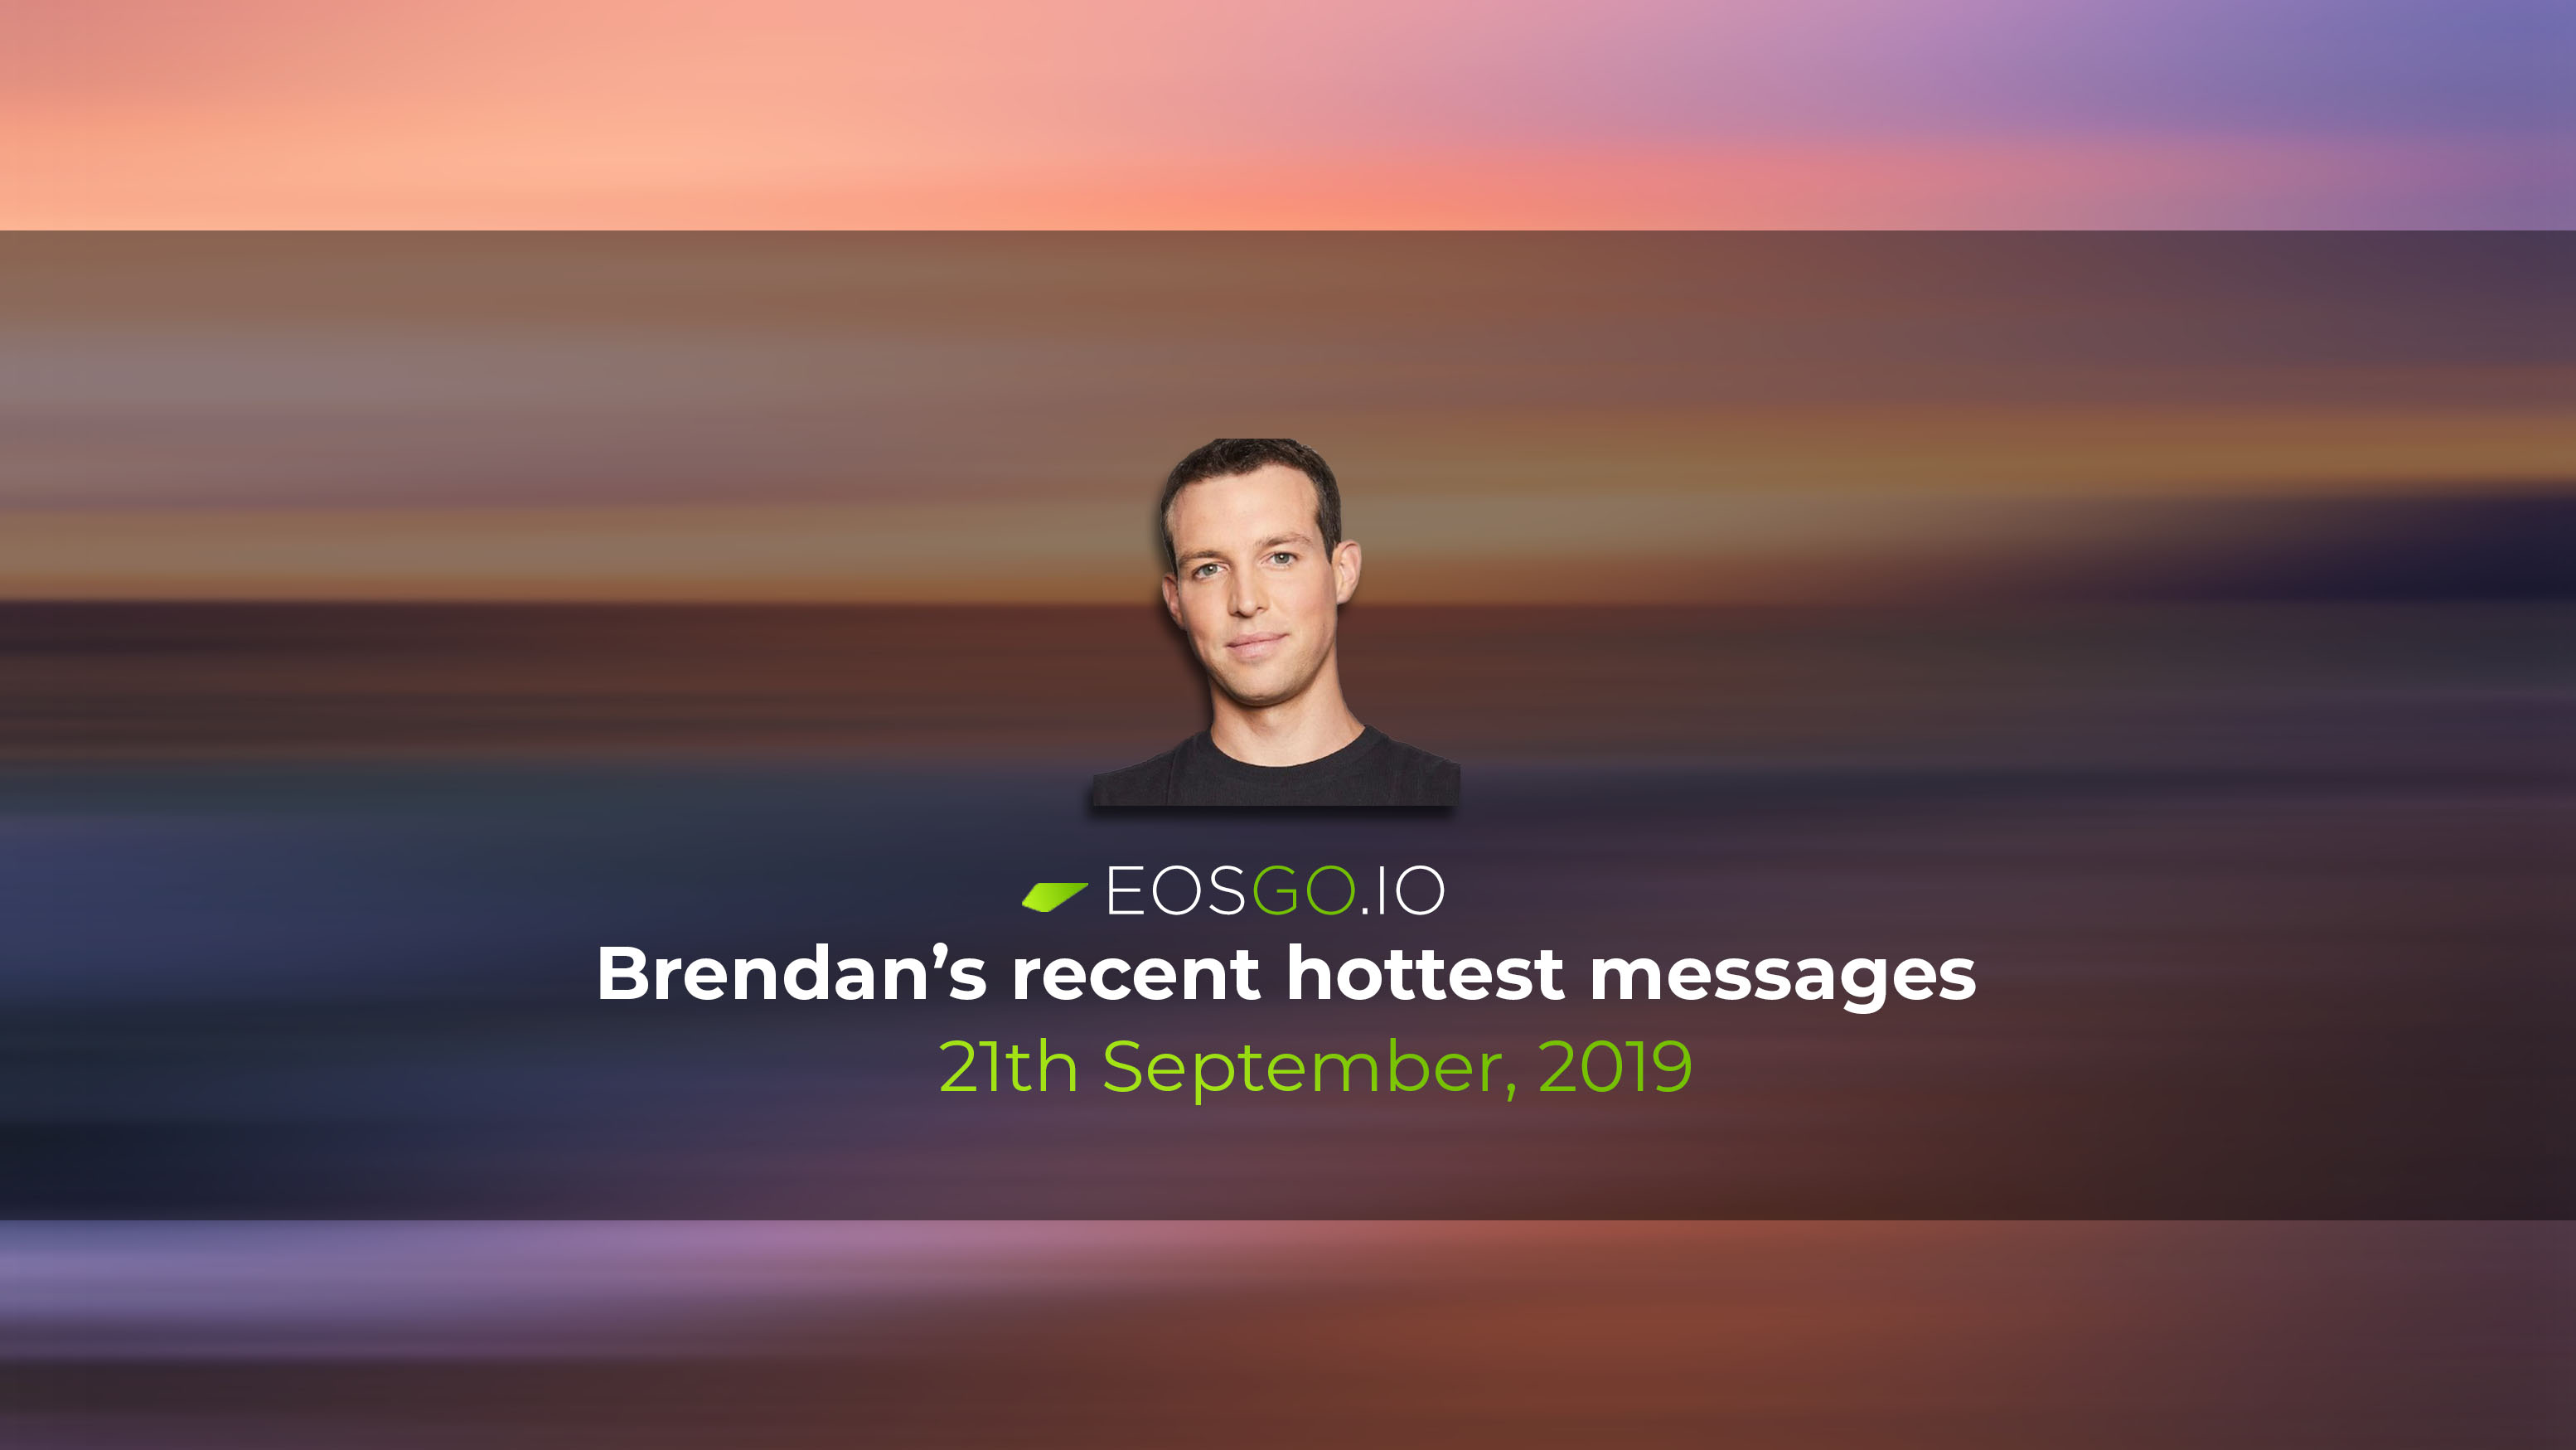 Brendan’s recent hottest messages, 21th September